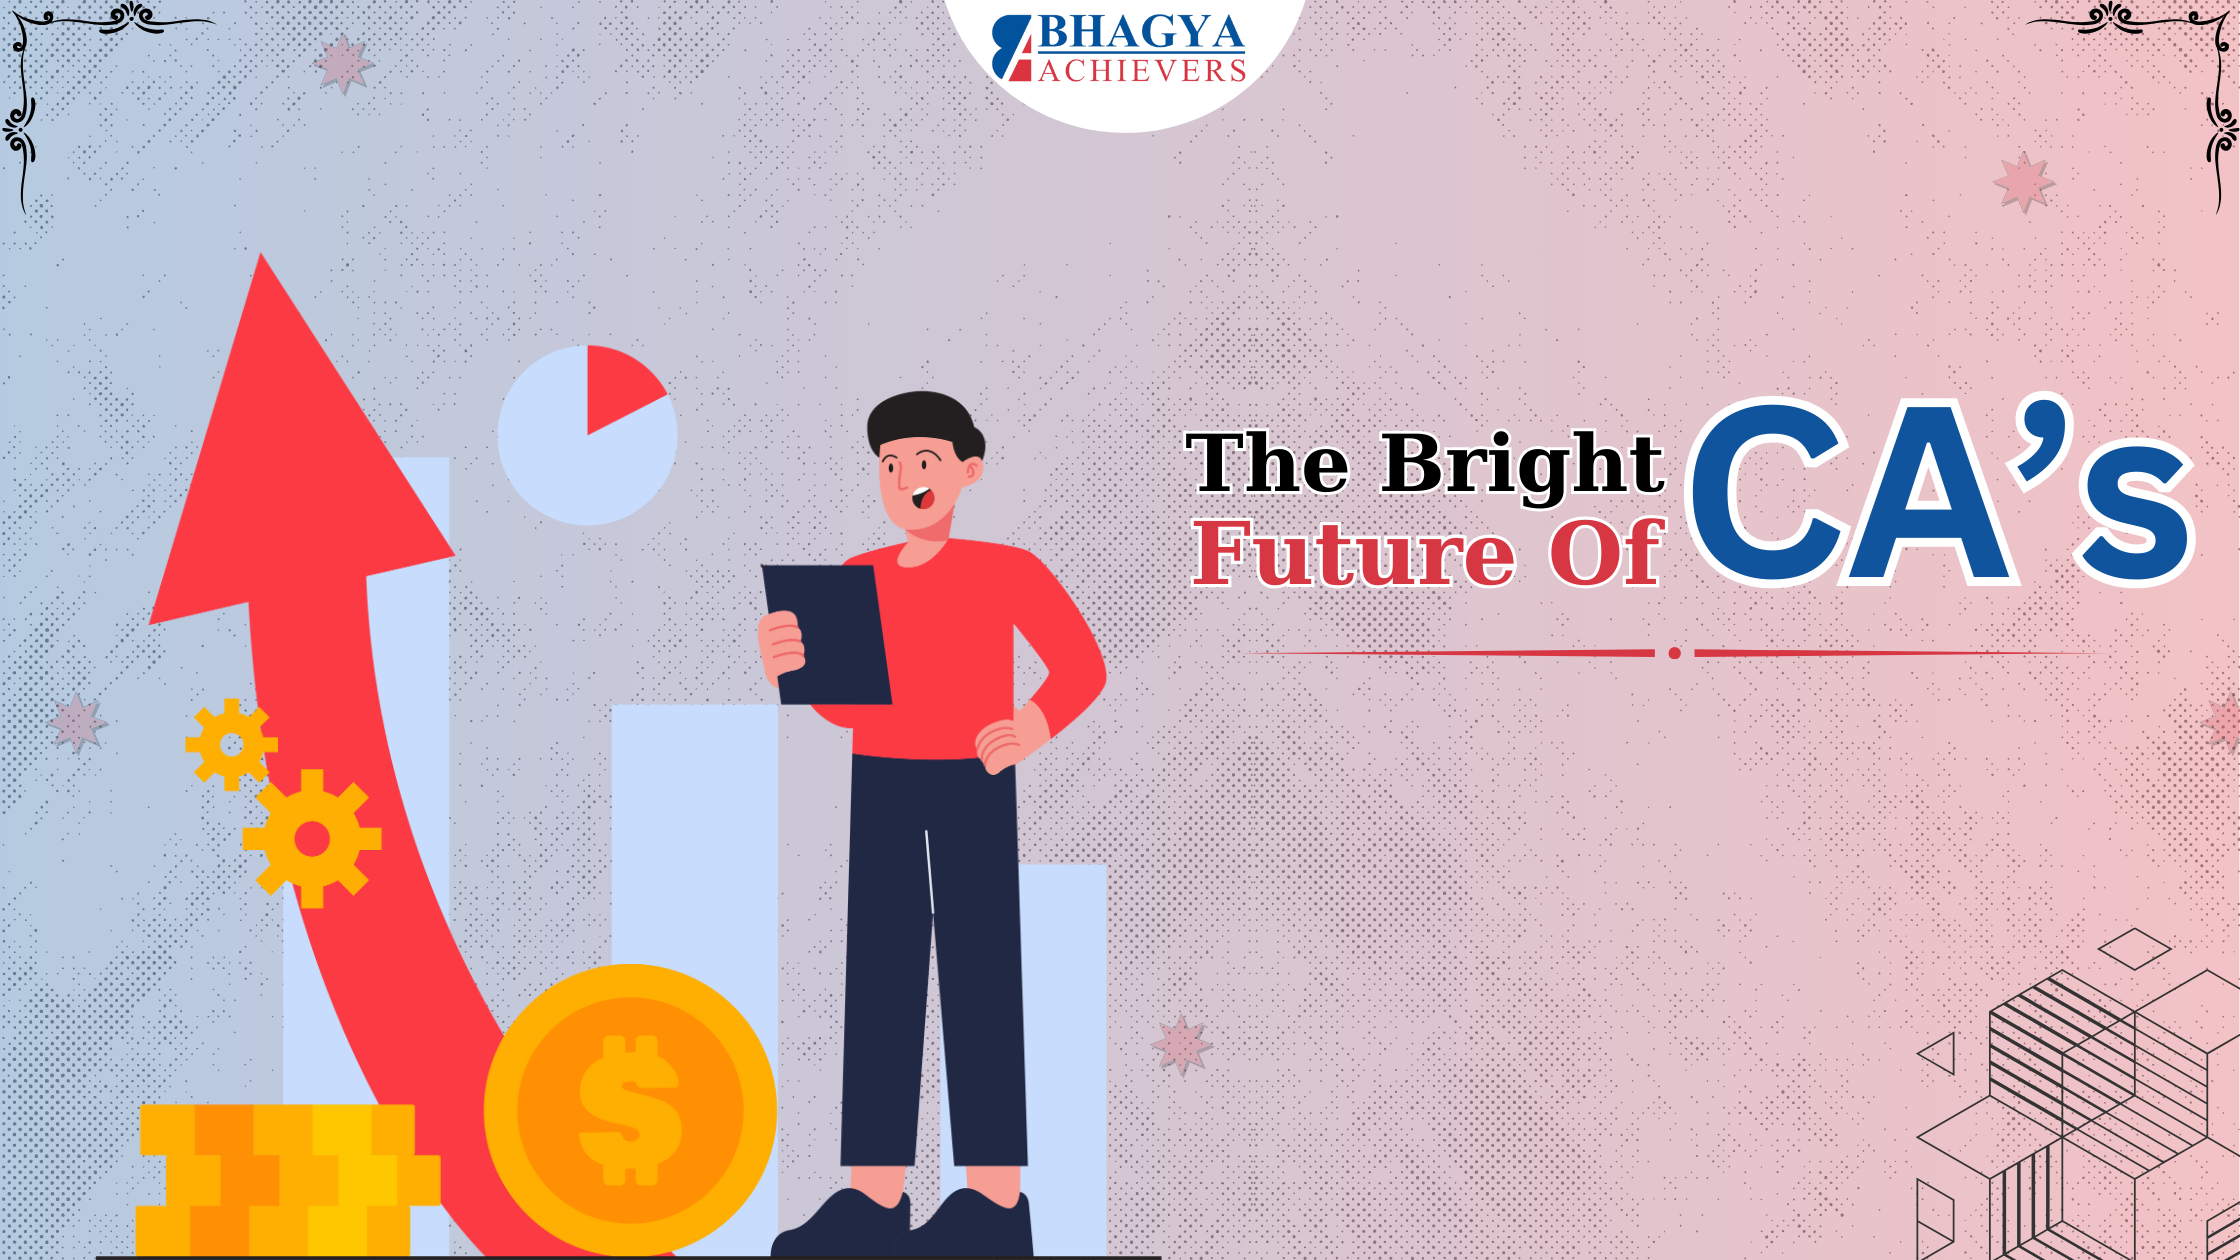 The bright future of CAs - Bhagya Achievers